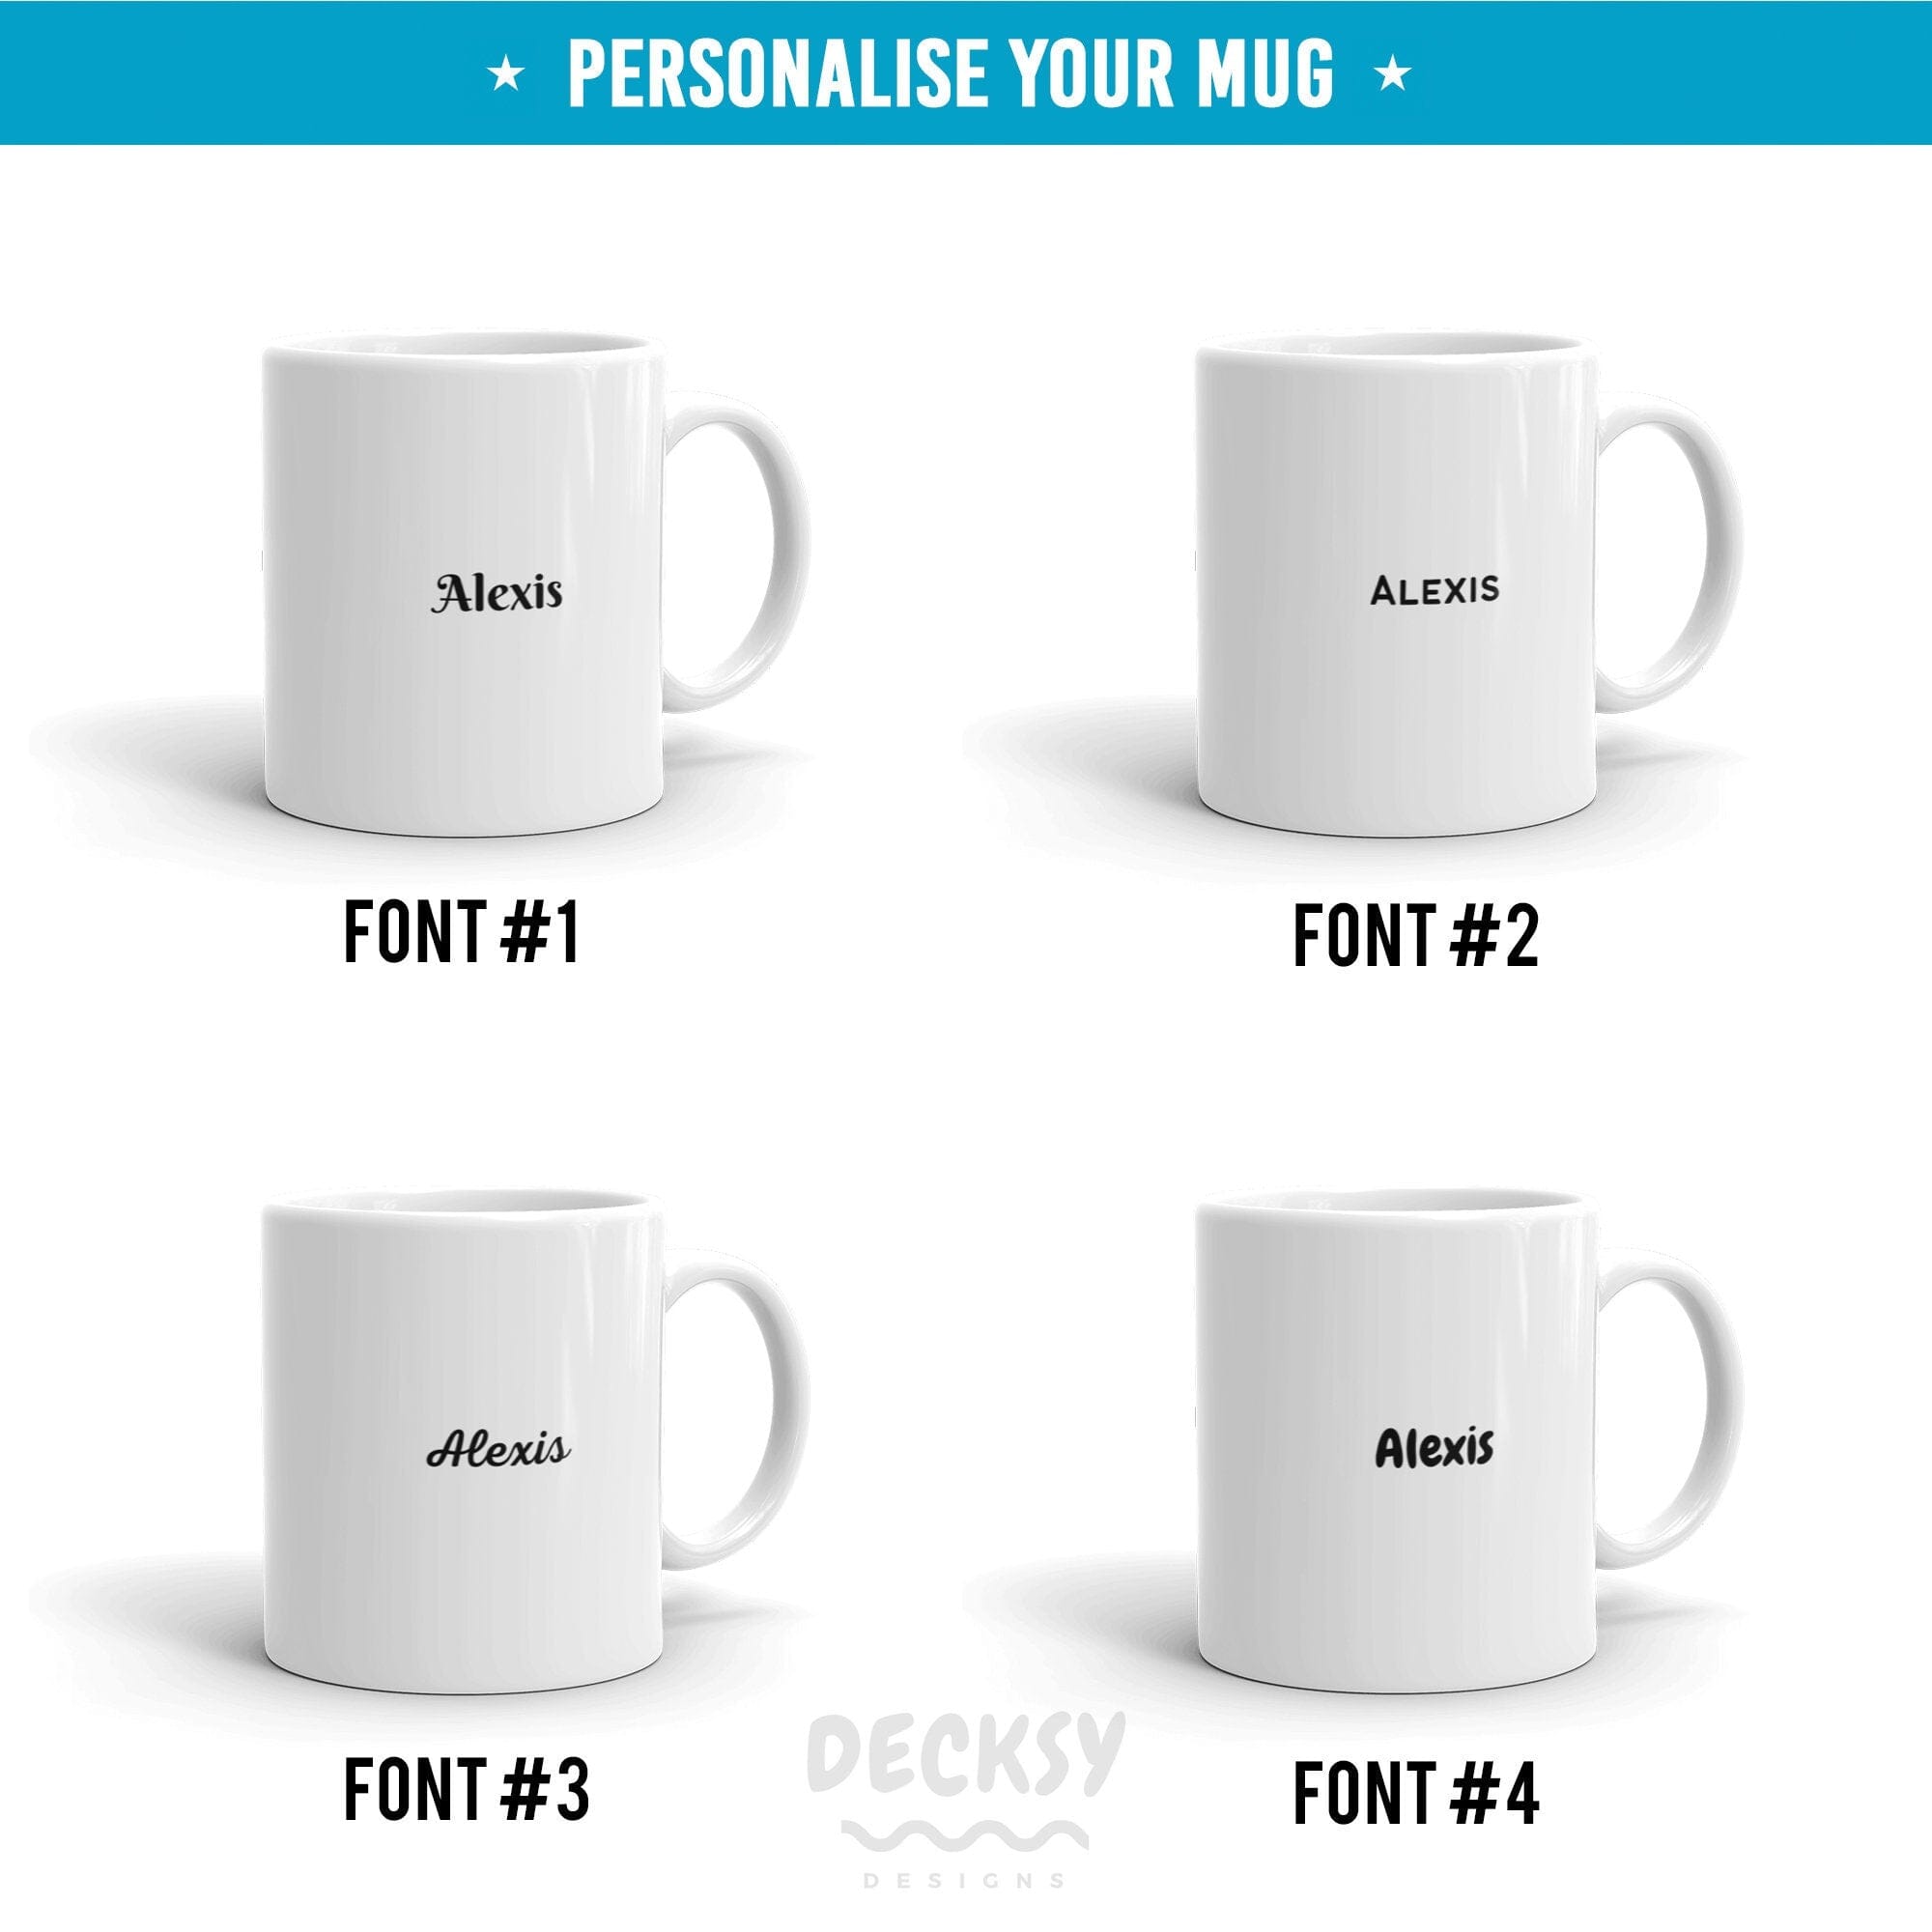 Funny English Teacher Mug, Personalised Coffee Gift-Home & Living:Kitchen & Dining:Drink & Barware:Drinkware:Mugs-DecksyDesigns-11 Oz-NO PERSONALISATION-DecksyDesigns